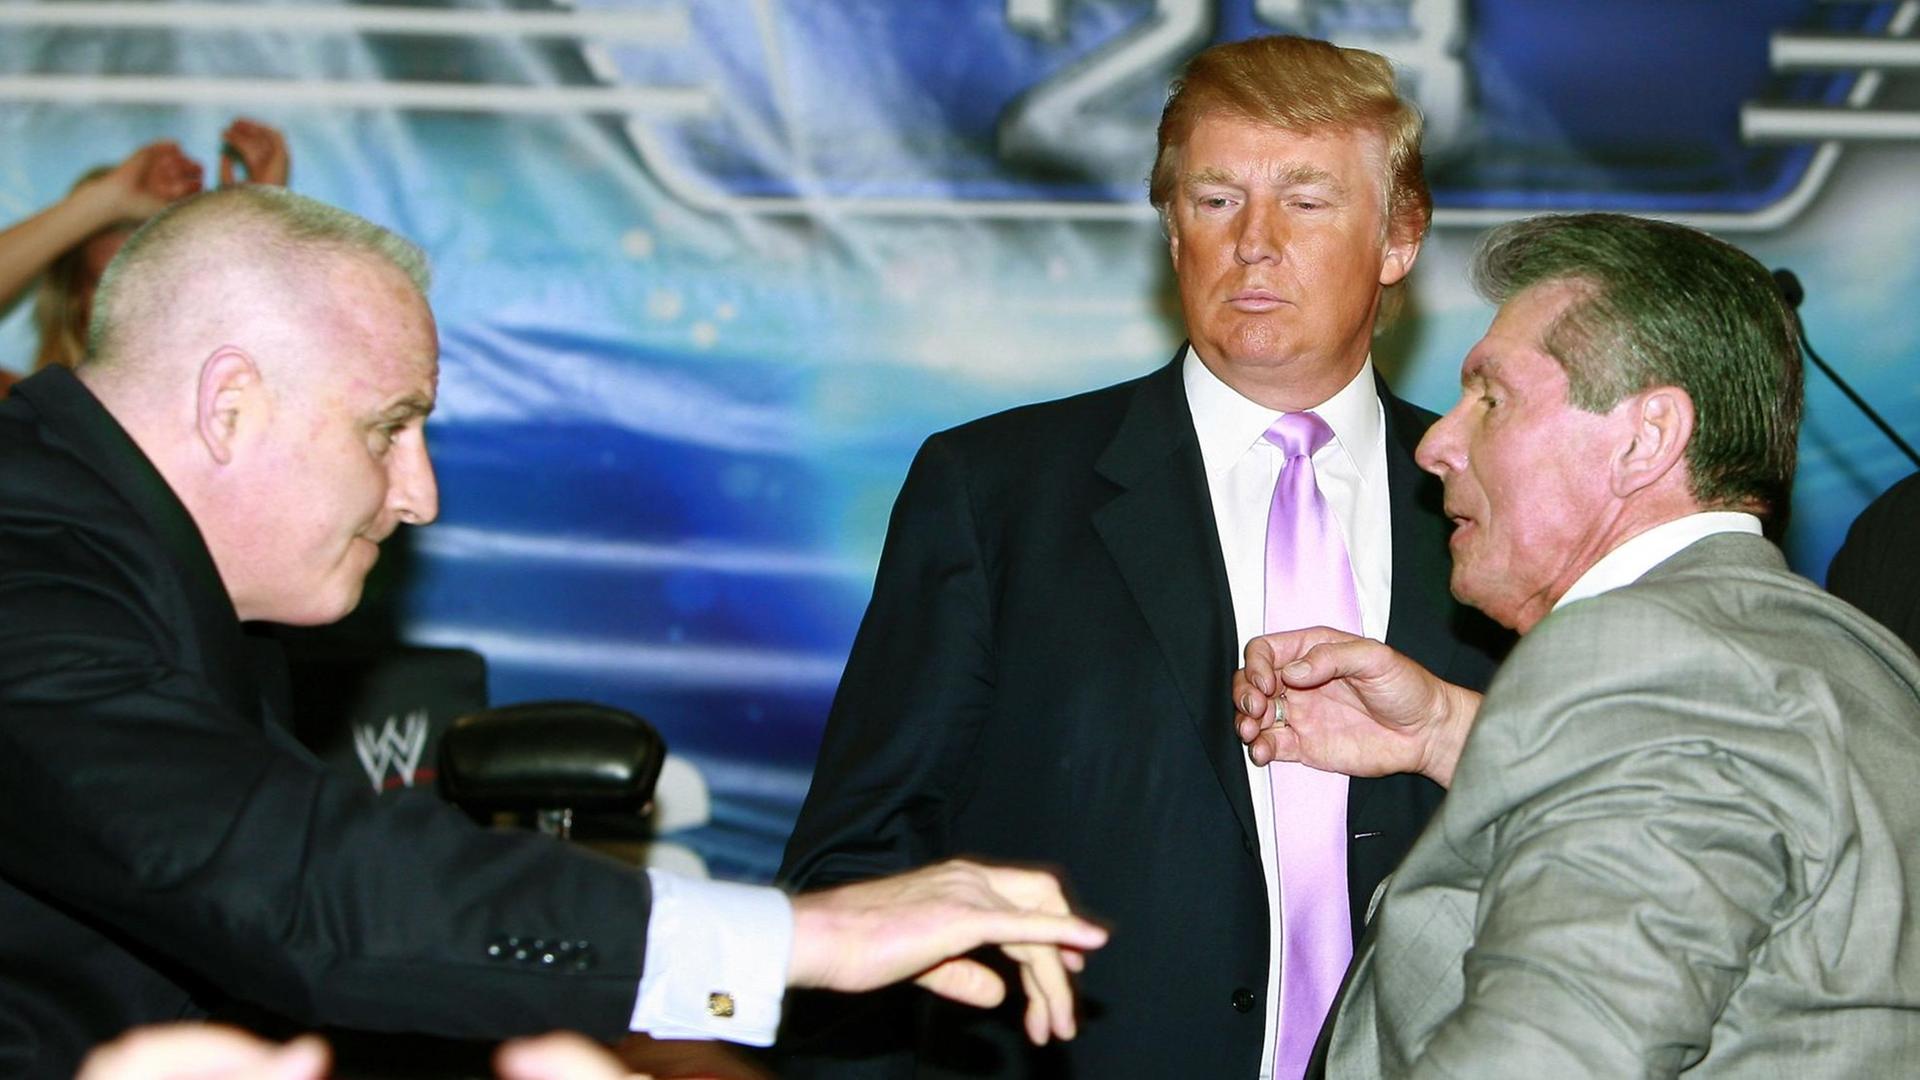 Pressekonferenz zum "Battle of the Billionaires" 2007 in New York: Im Wrestling-Kampf tritt US-Magnat Donald Trump gegen den Wrestler Bobby Lasley an.